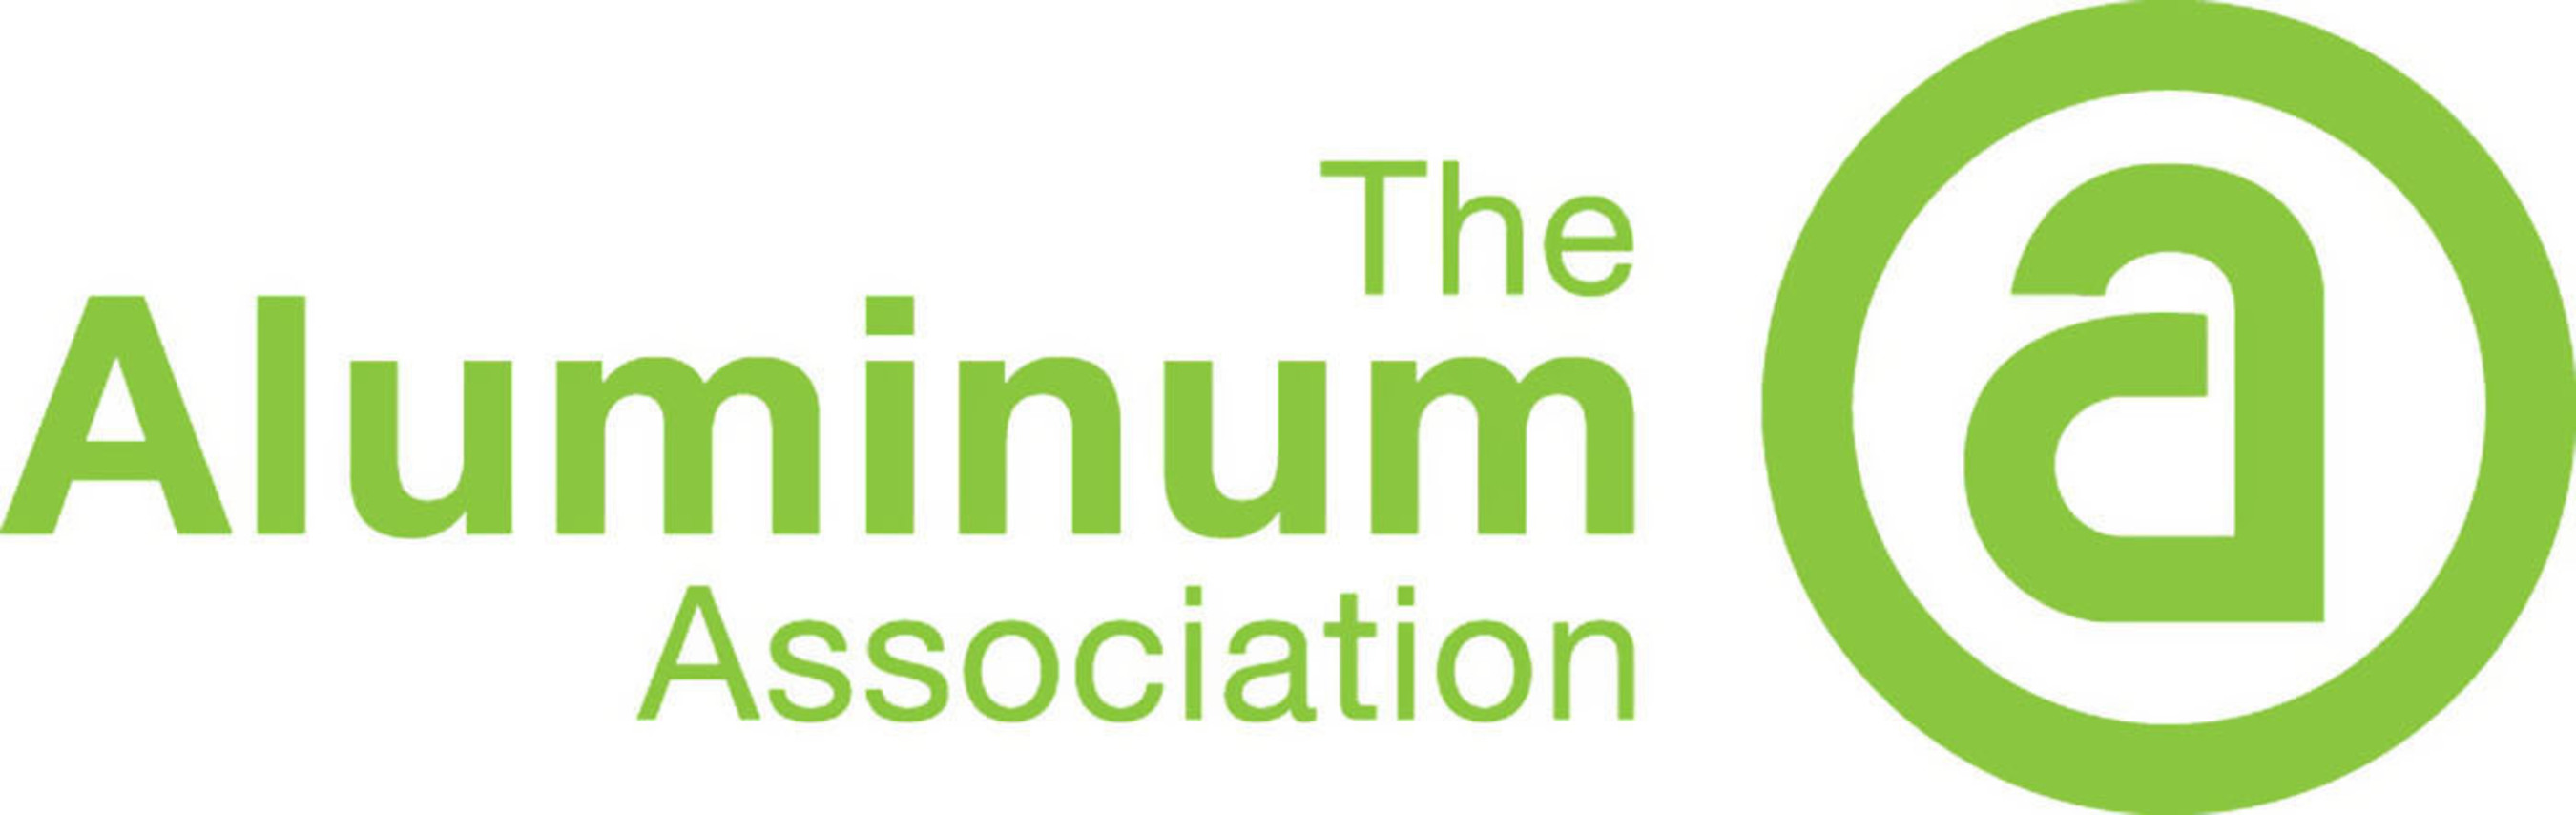 Aluminium Association Logo. (PRNewsFoto/The Aluminum Association) (PRNewsFoto/)